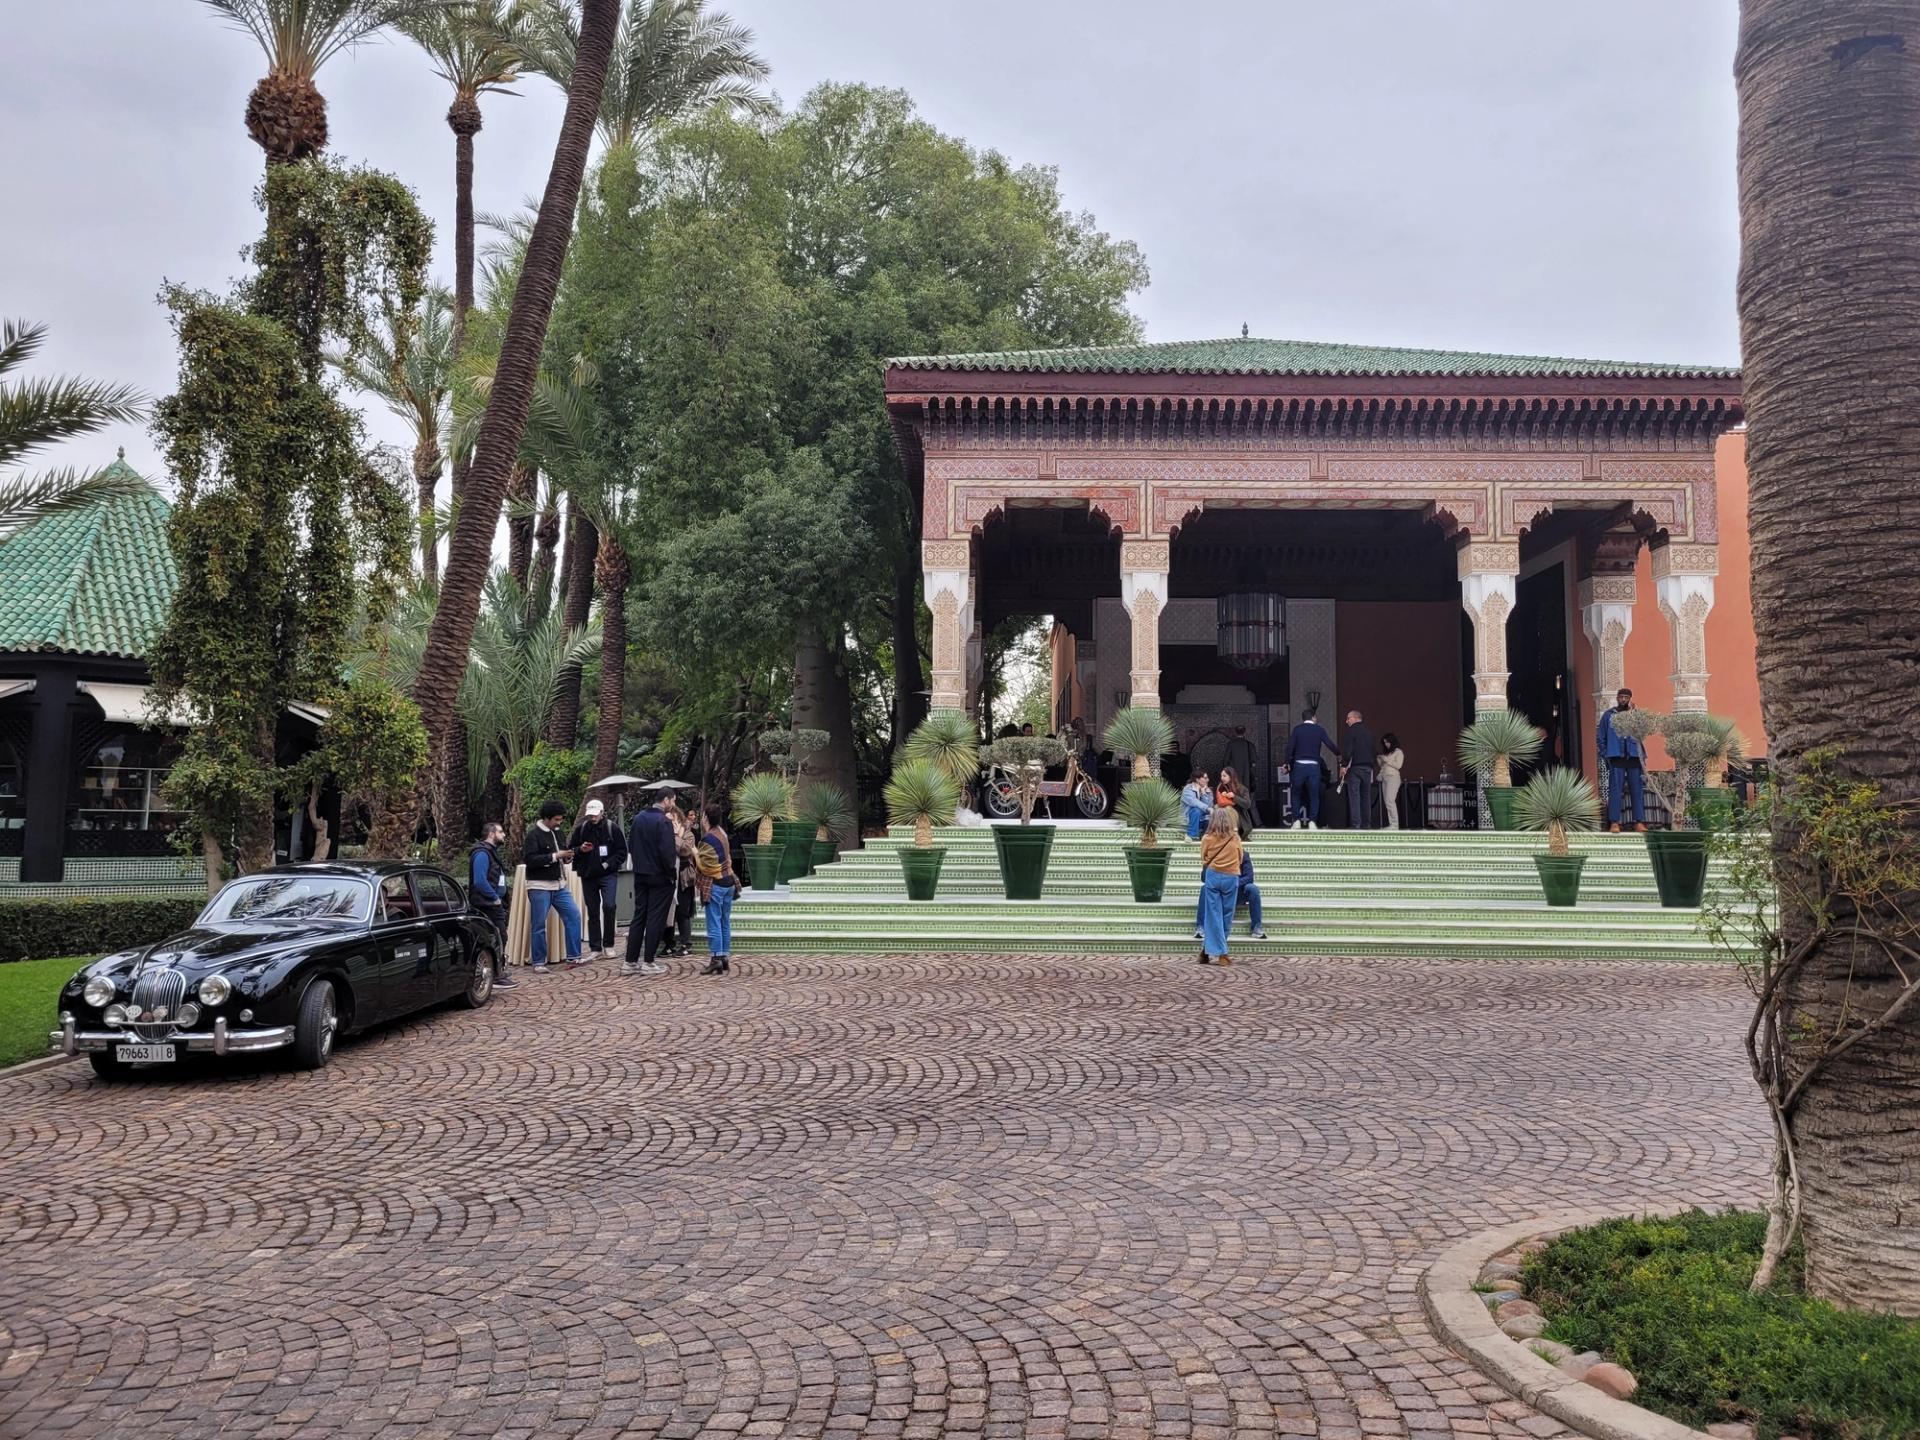 1-54 Marrakech takes place at the grand La Mamounia hotel